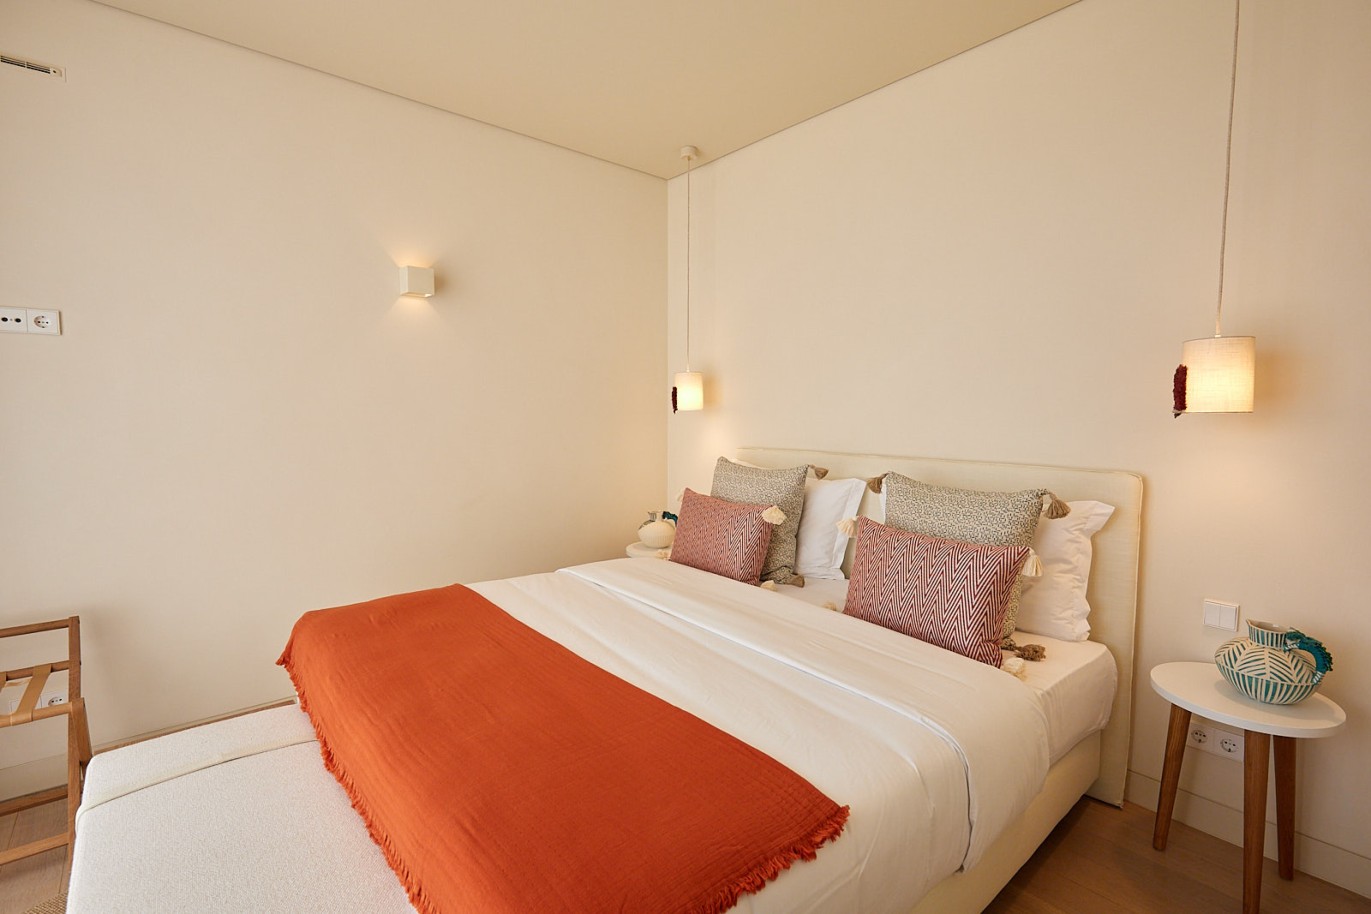 2 bedroom apartment in resort, for sale in Porches, Algarve_229113